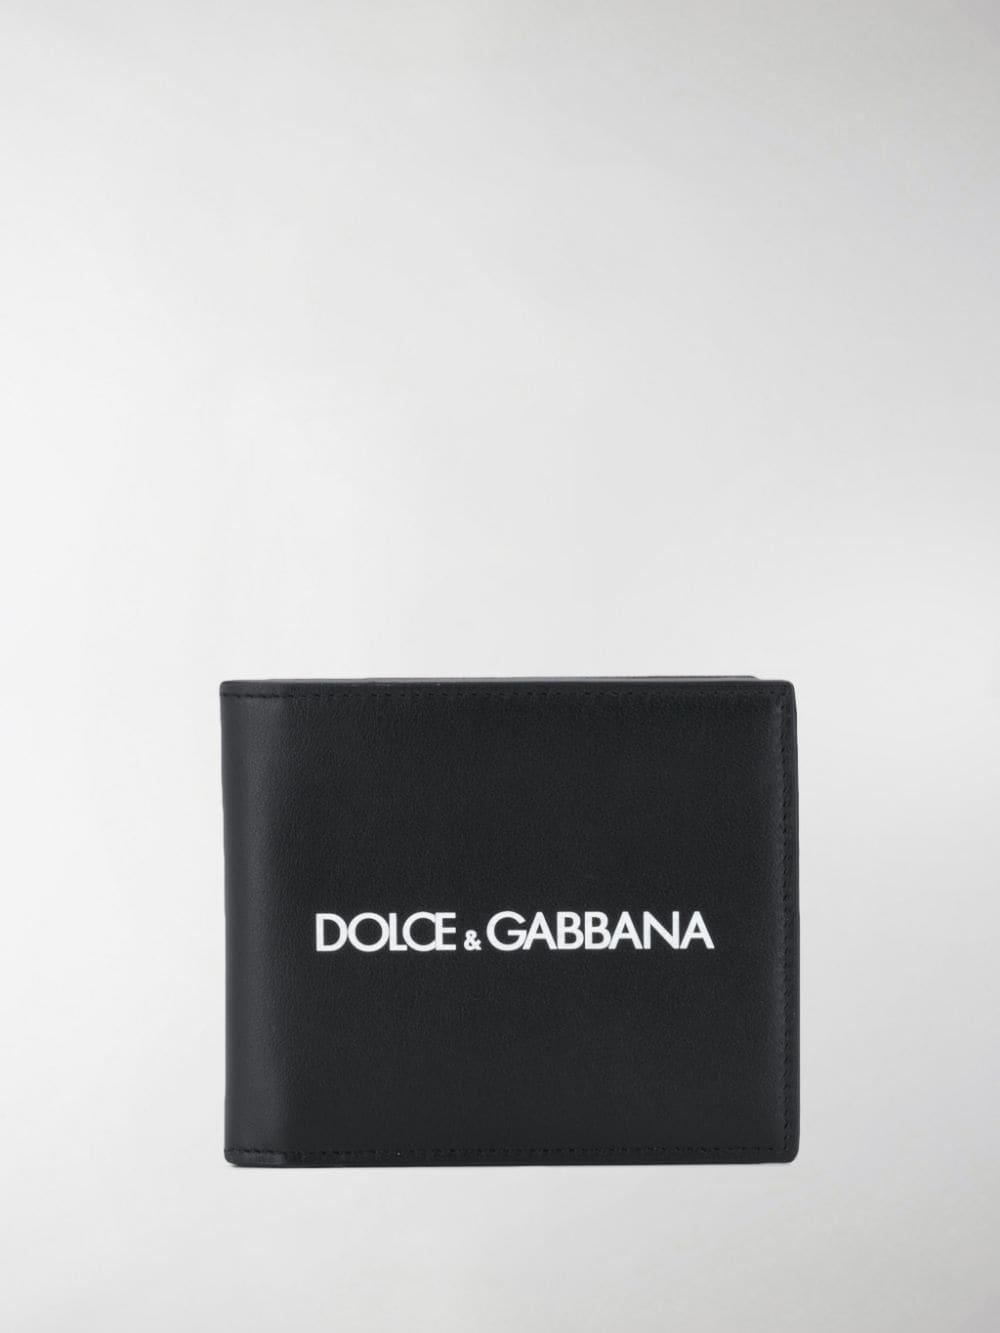 Dolce & Gabbana Leather Logo Print Bifold Wallet in Black for Men - Lyst